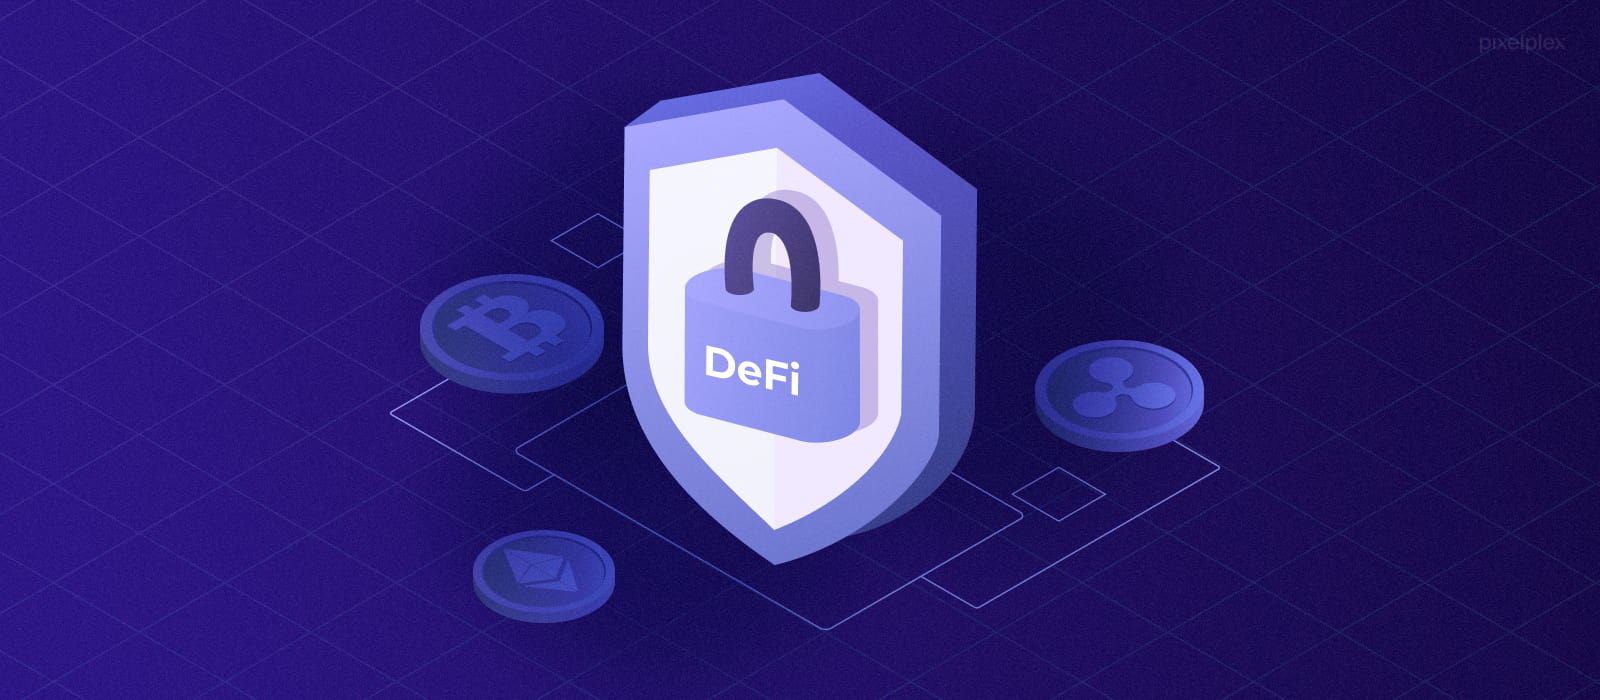 DeFi 2.0 Security